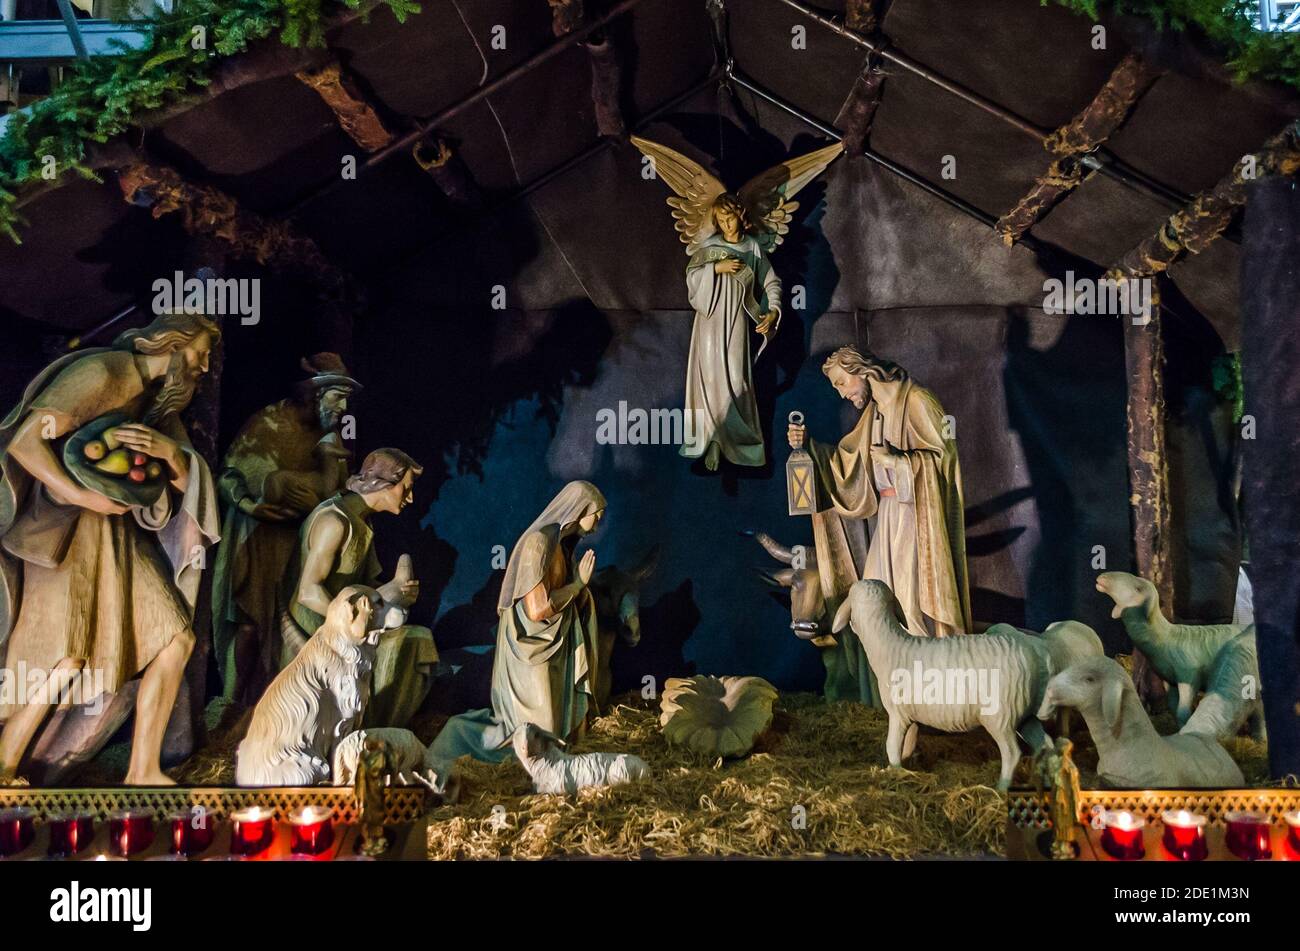 Nativity Scene Displayed in a Catholic Church During Christmas Season ...